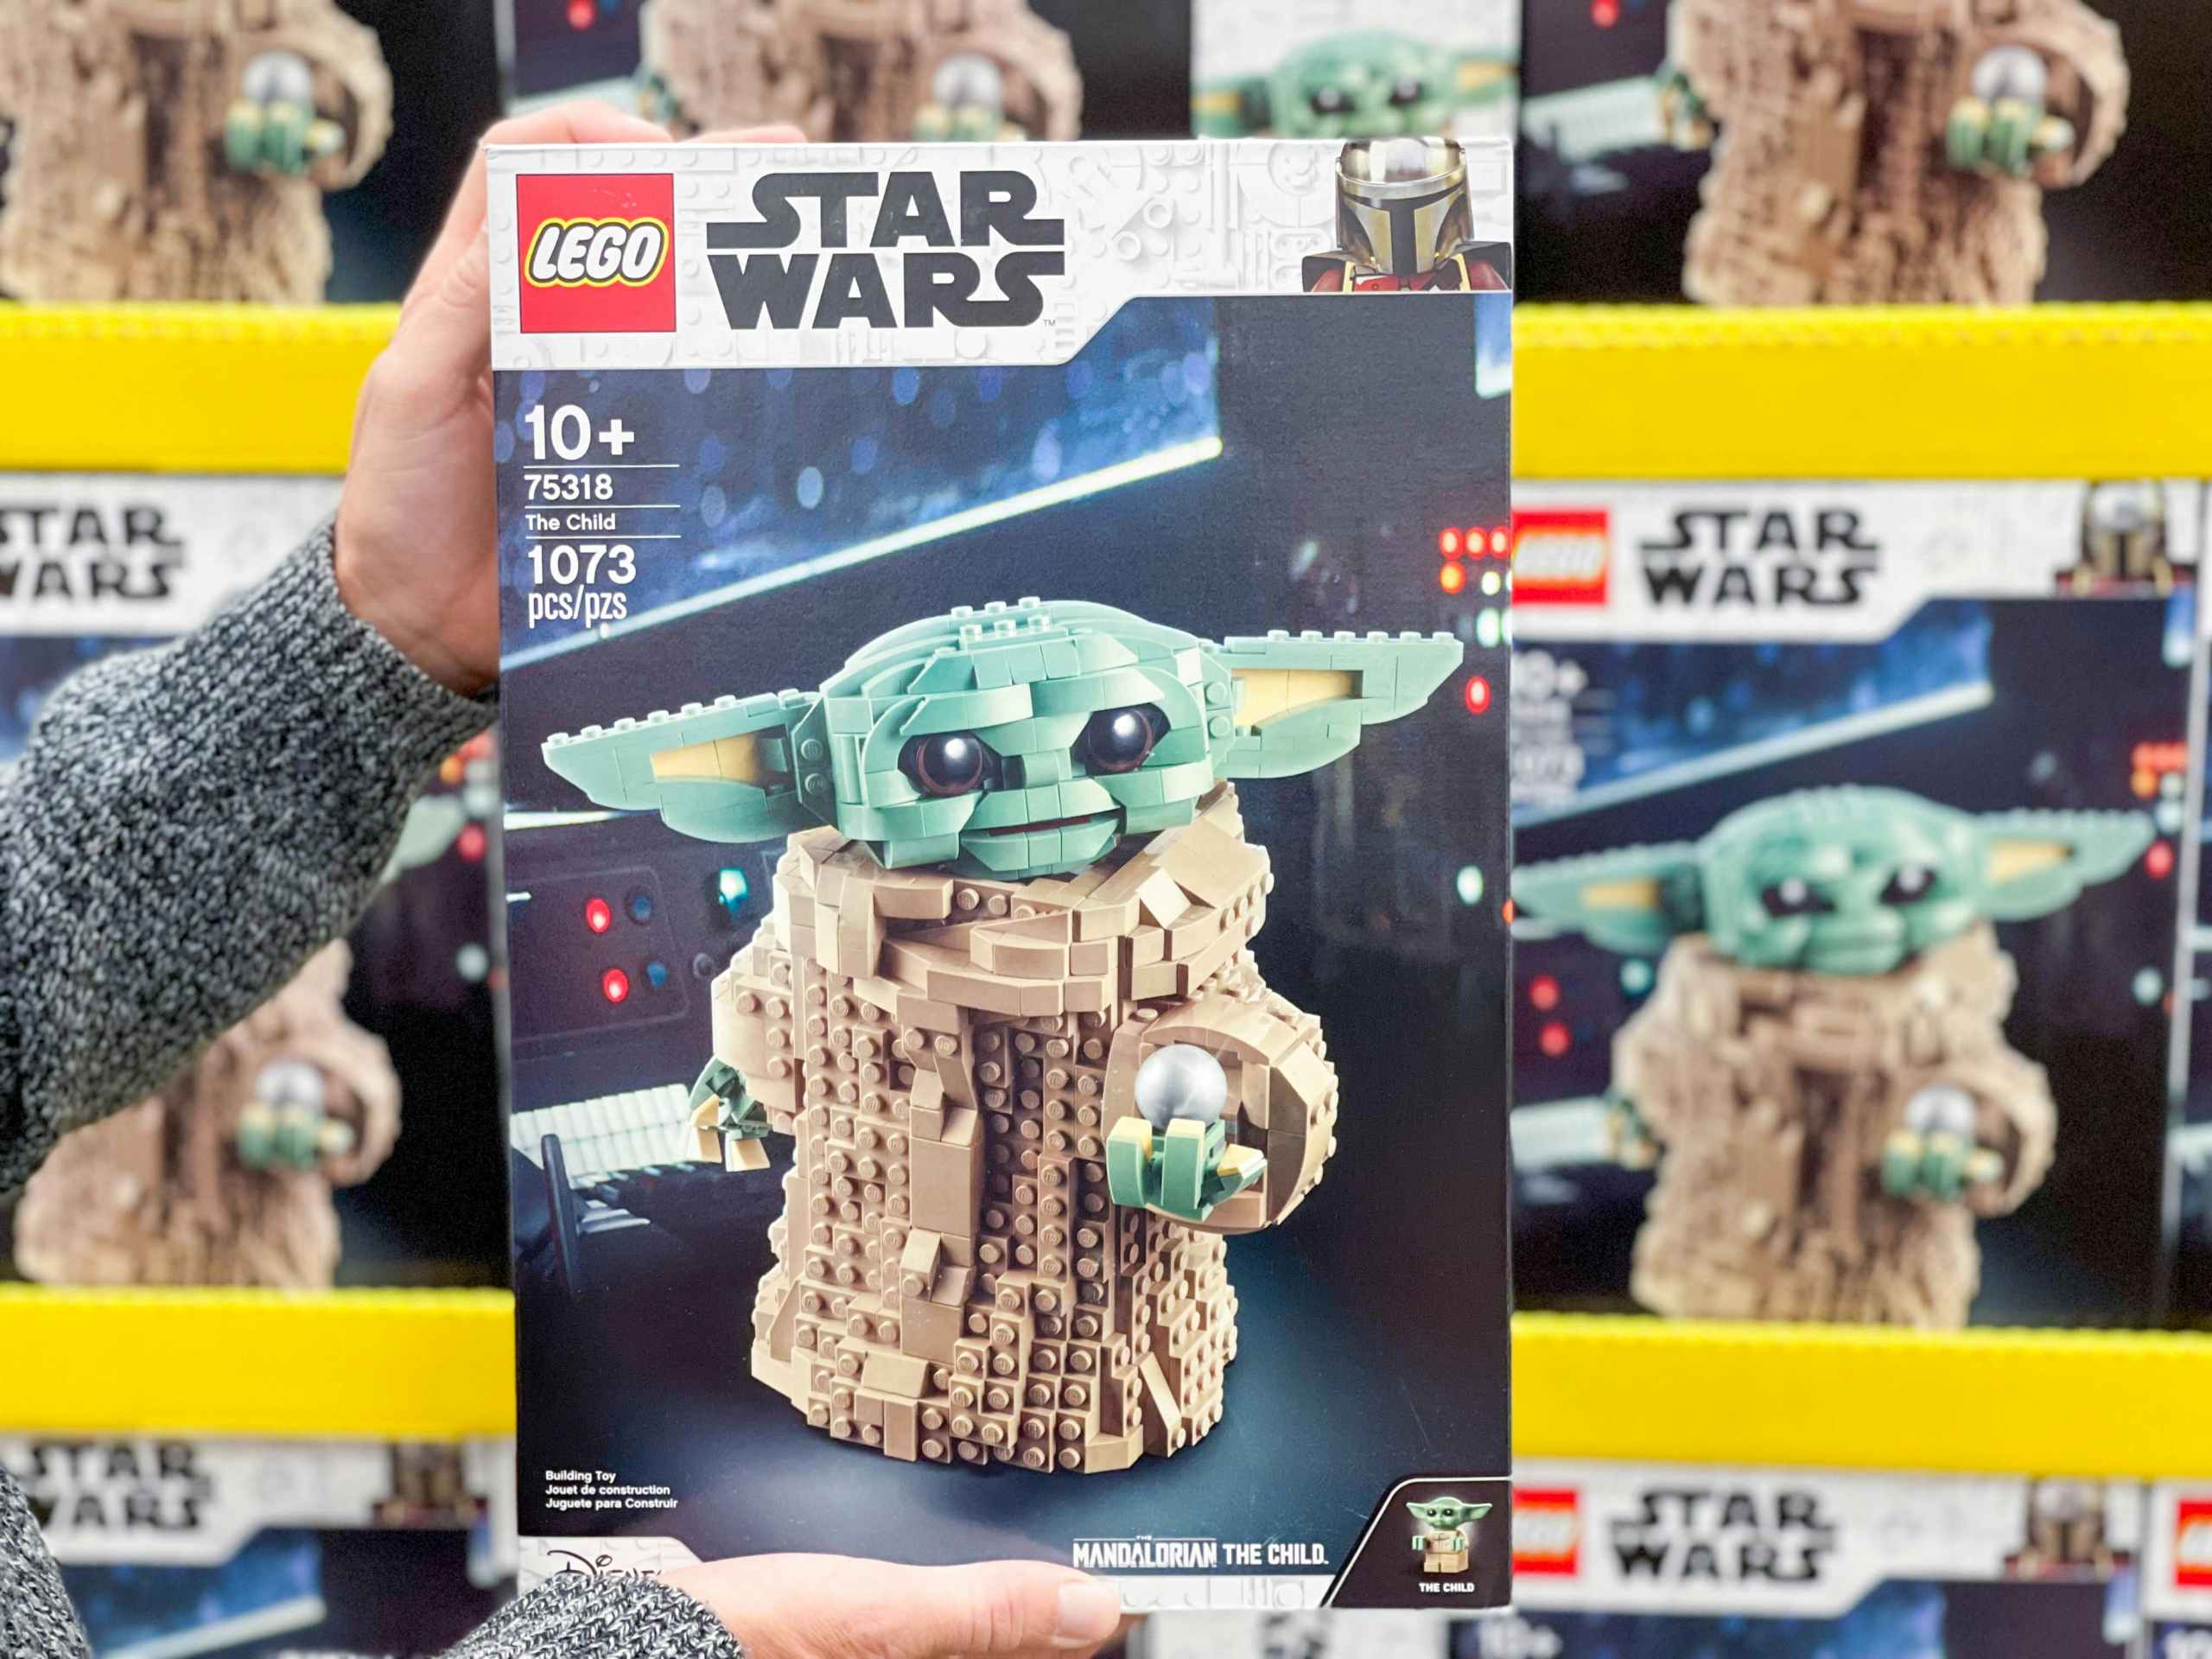 lego star wars set in costco